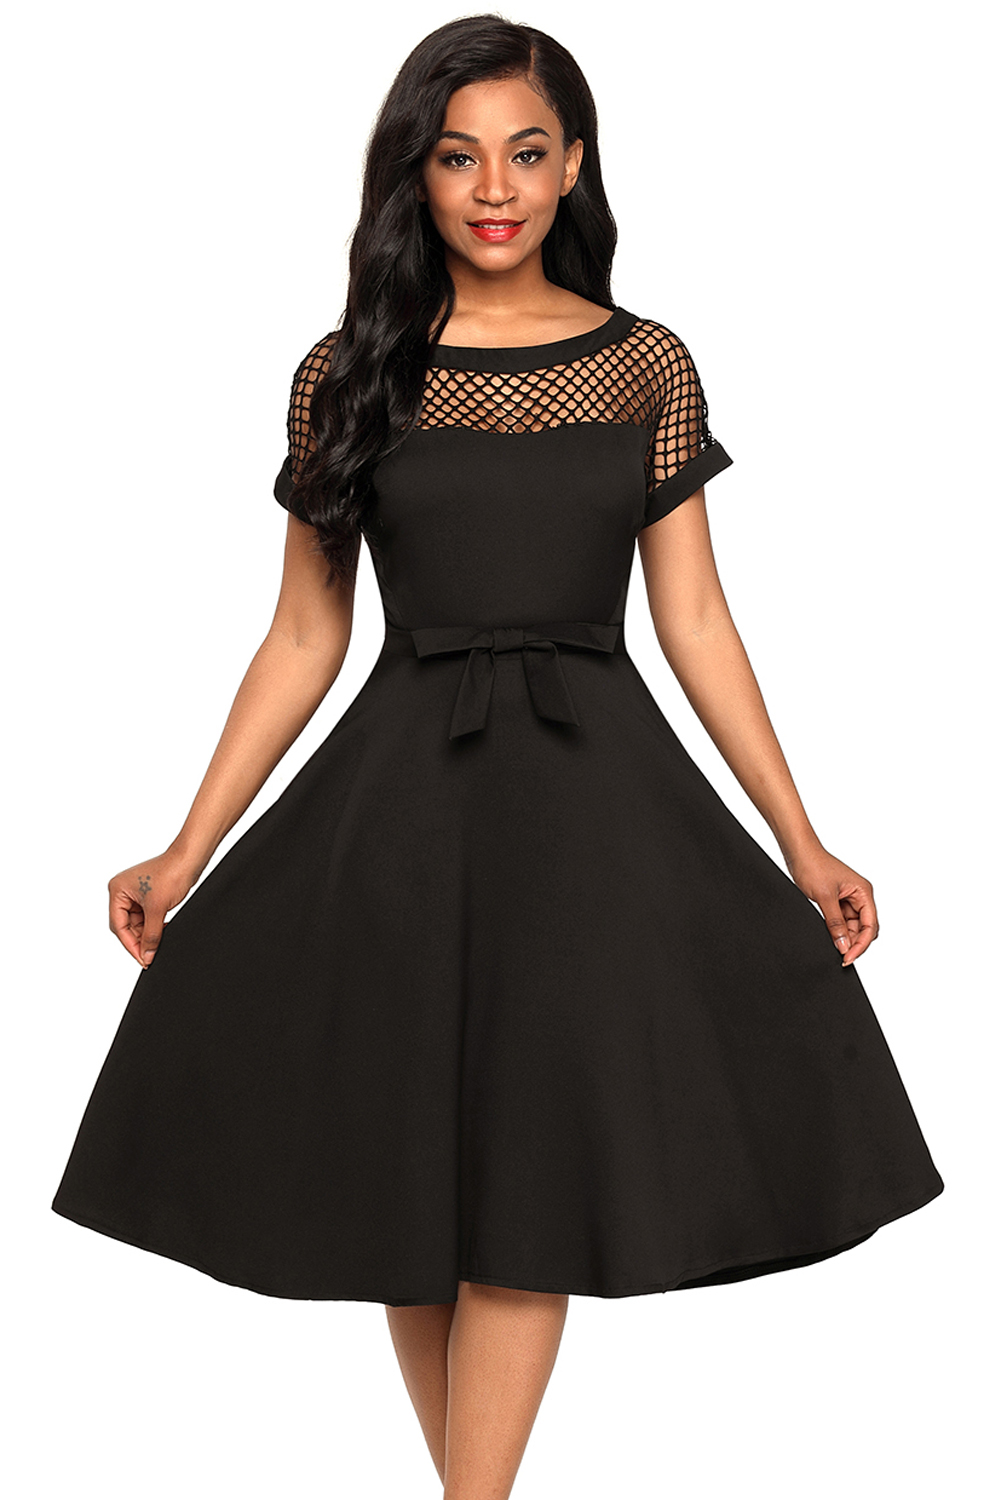 BY61862-2 Fishnet Insert Black Bowknot Embellished Dress